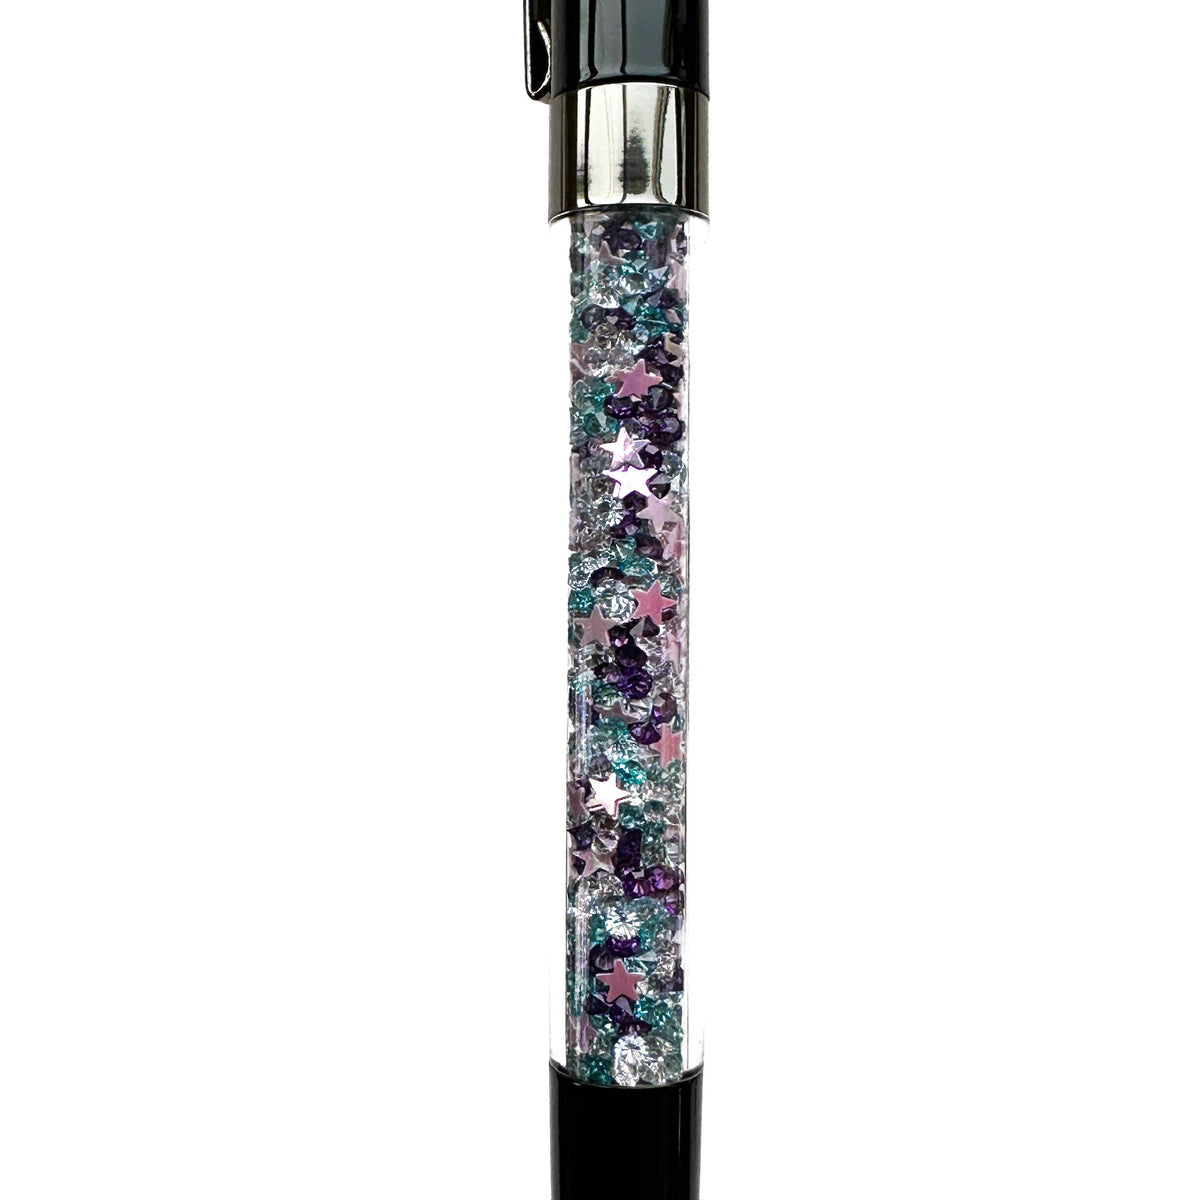 Wishful Crystal VBPen | limited pen